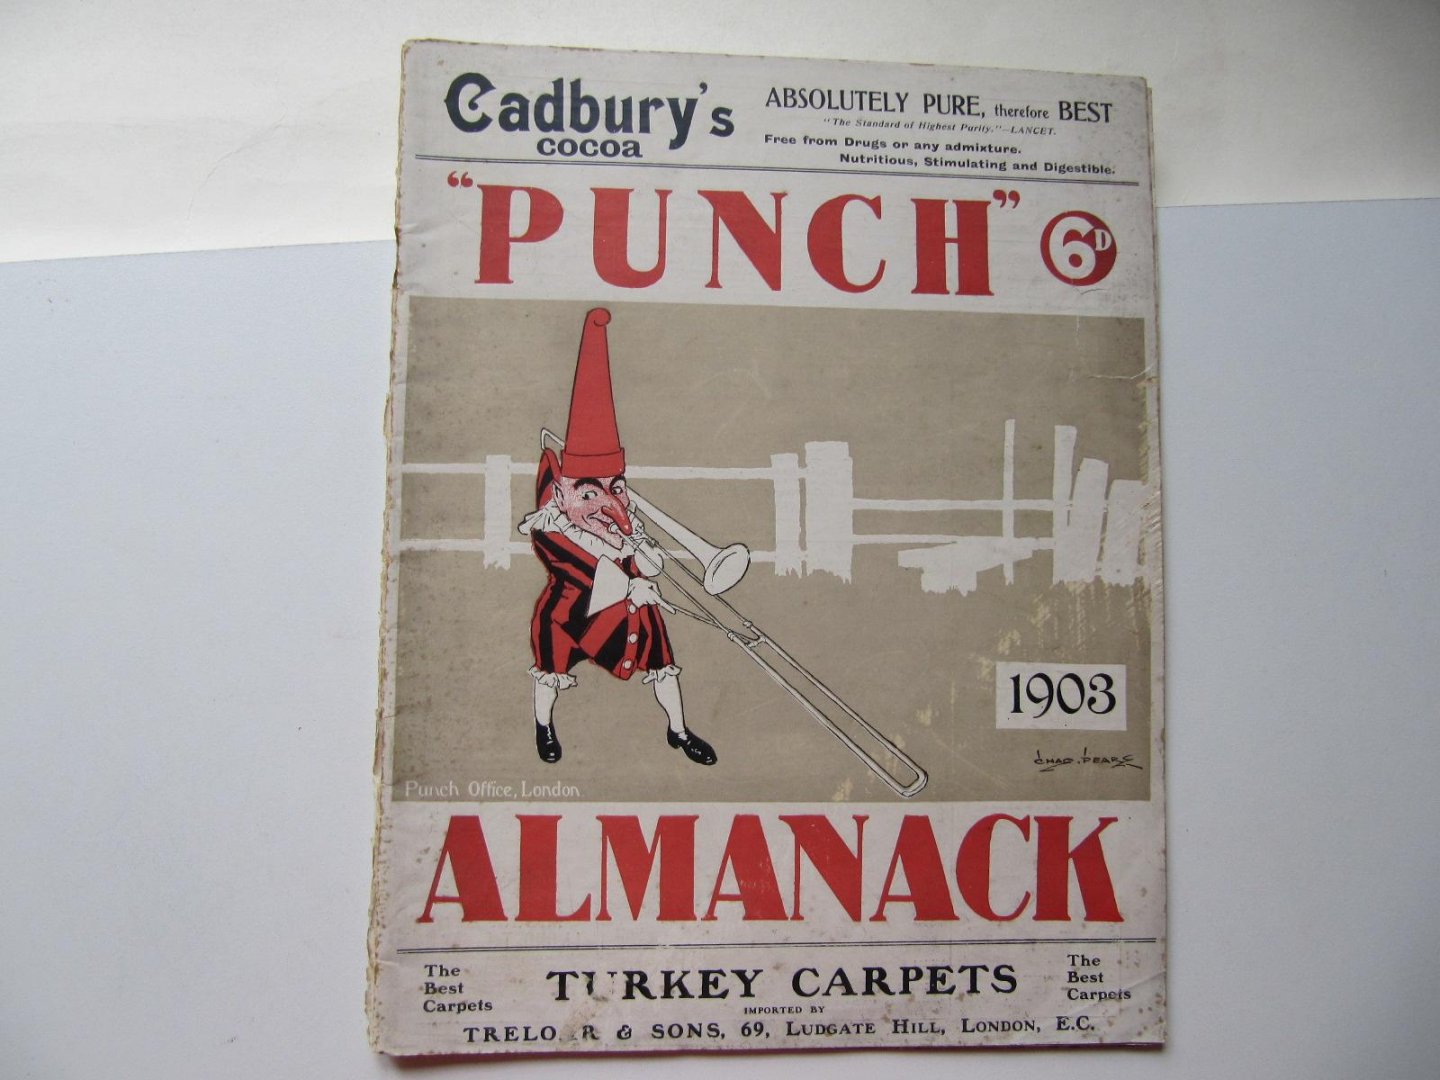 Redactie - "Punch" Almanack - for 1903